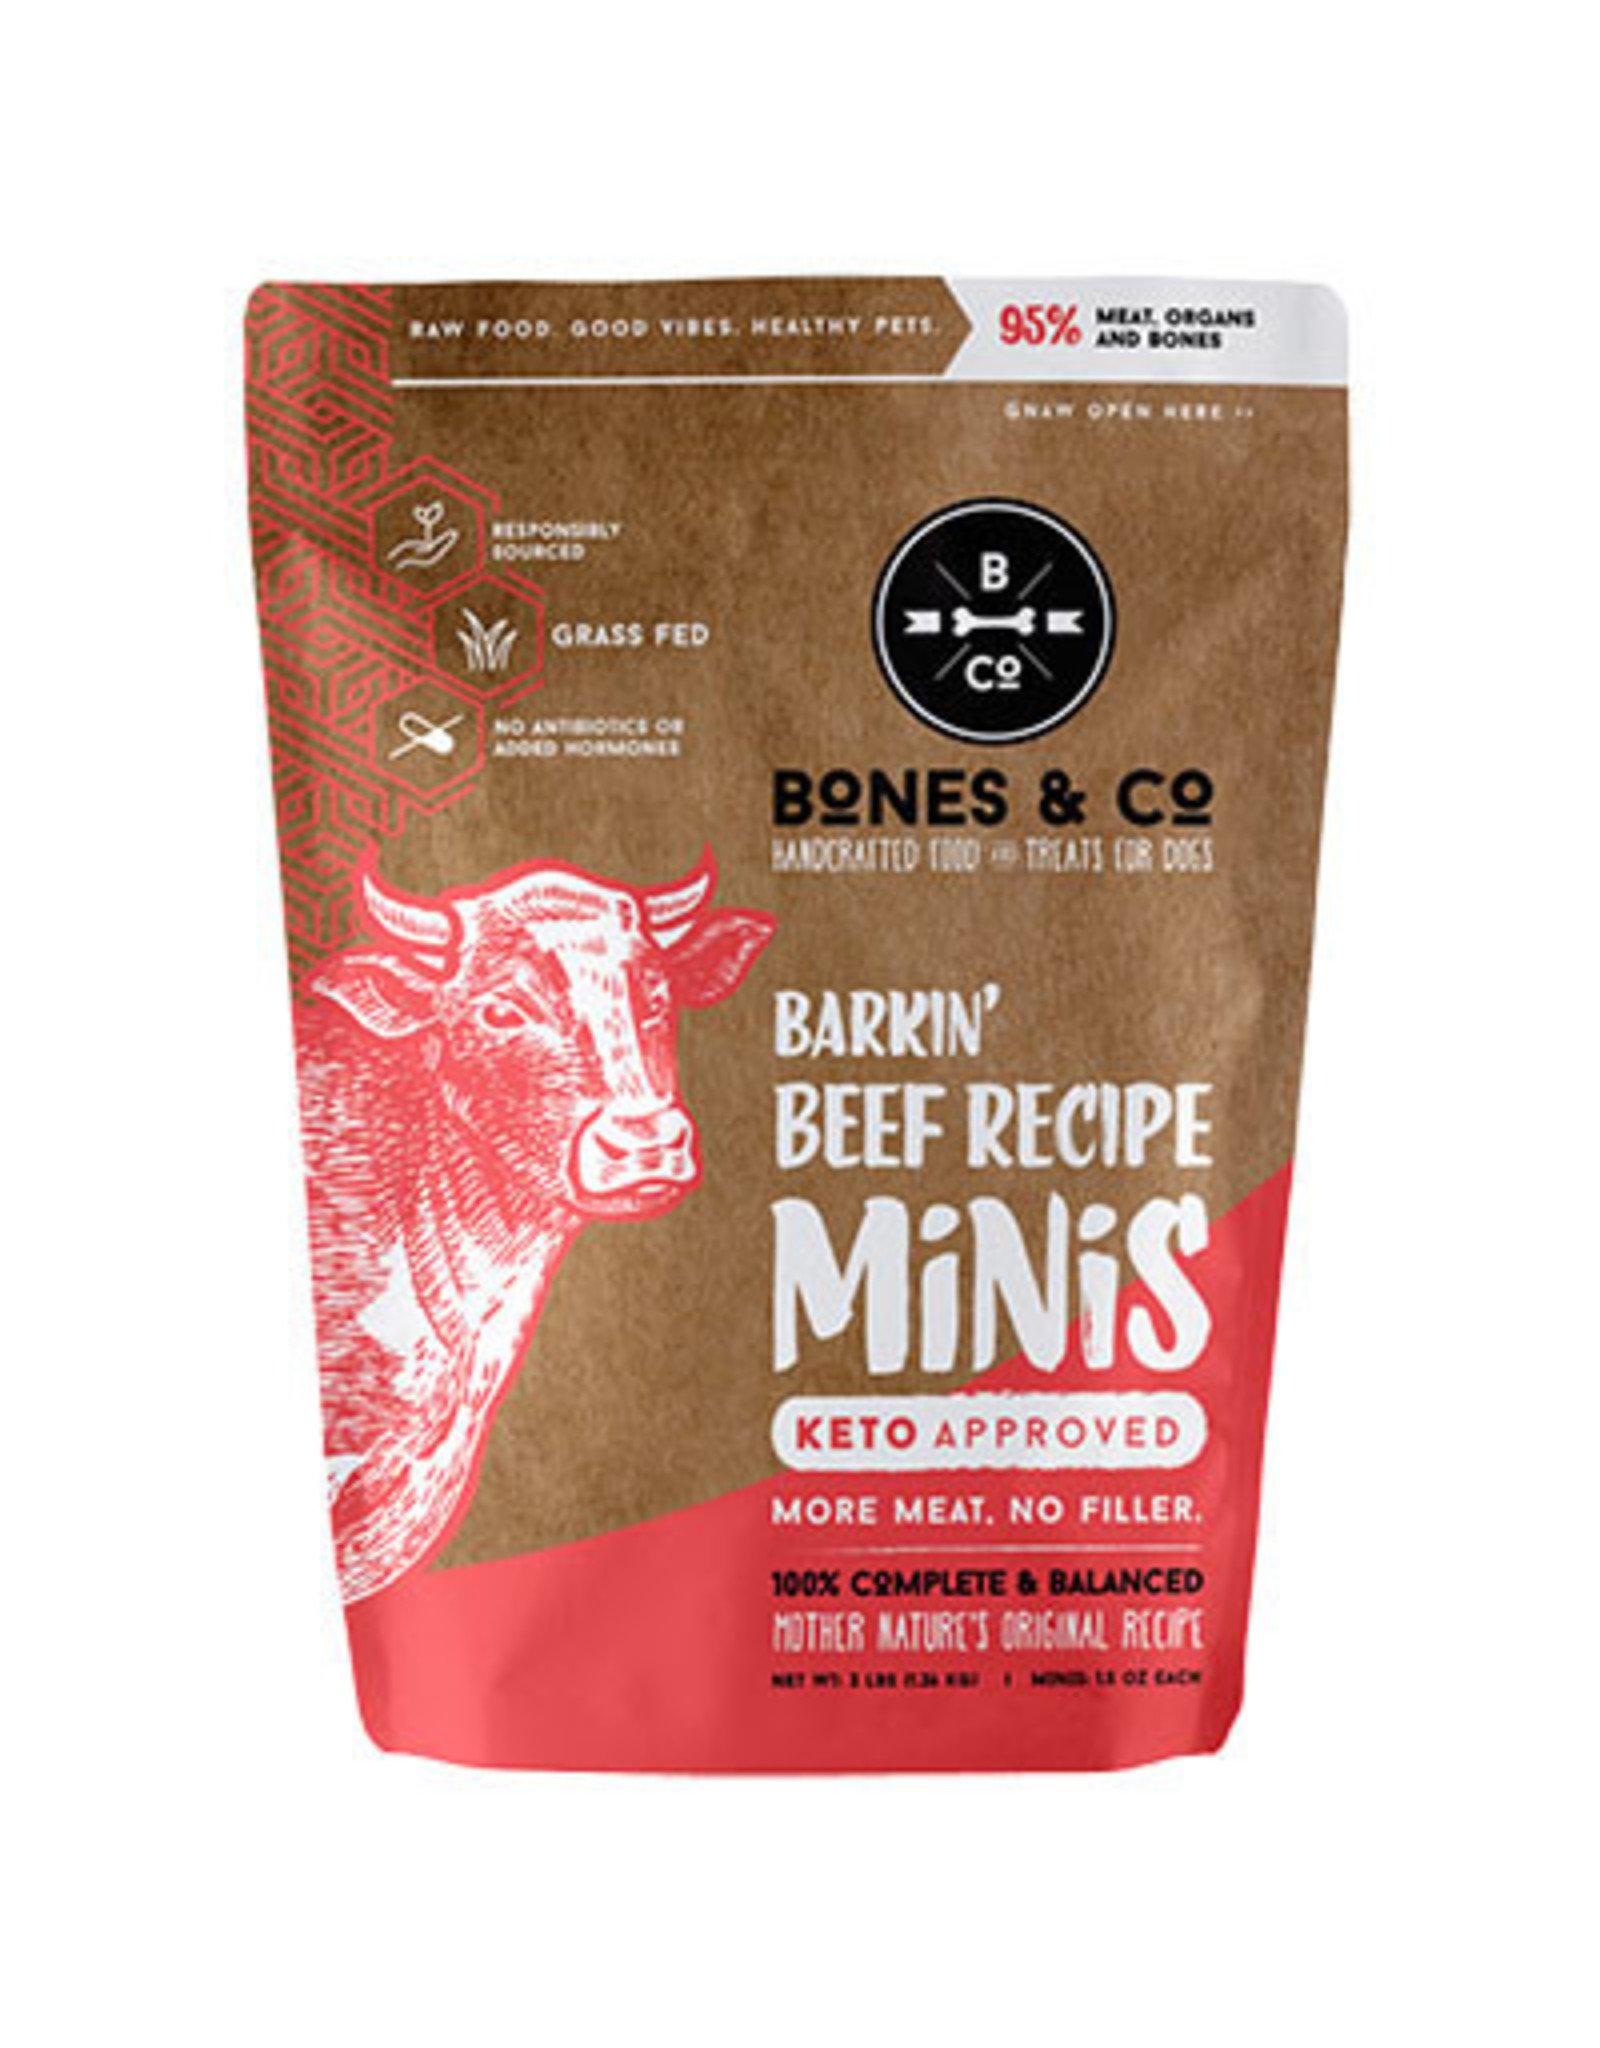 The Bones & Co. THE BONES & CO. DOG FROZEN RAW BARKIN' BEEF RECIPE